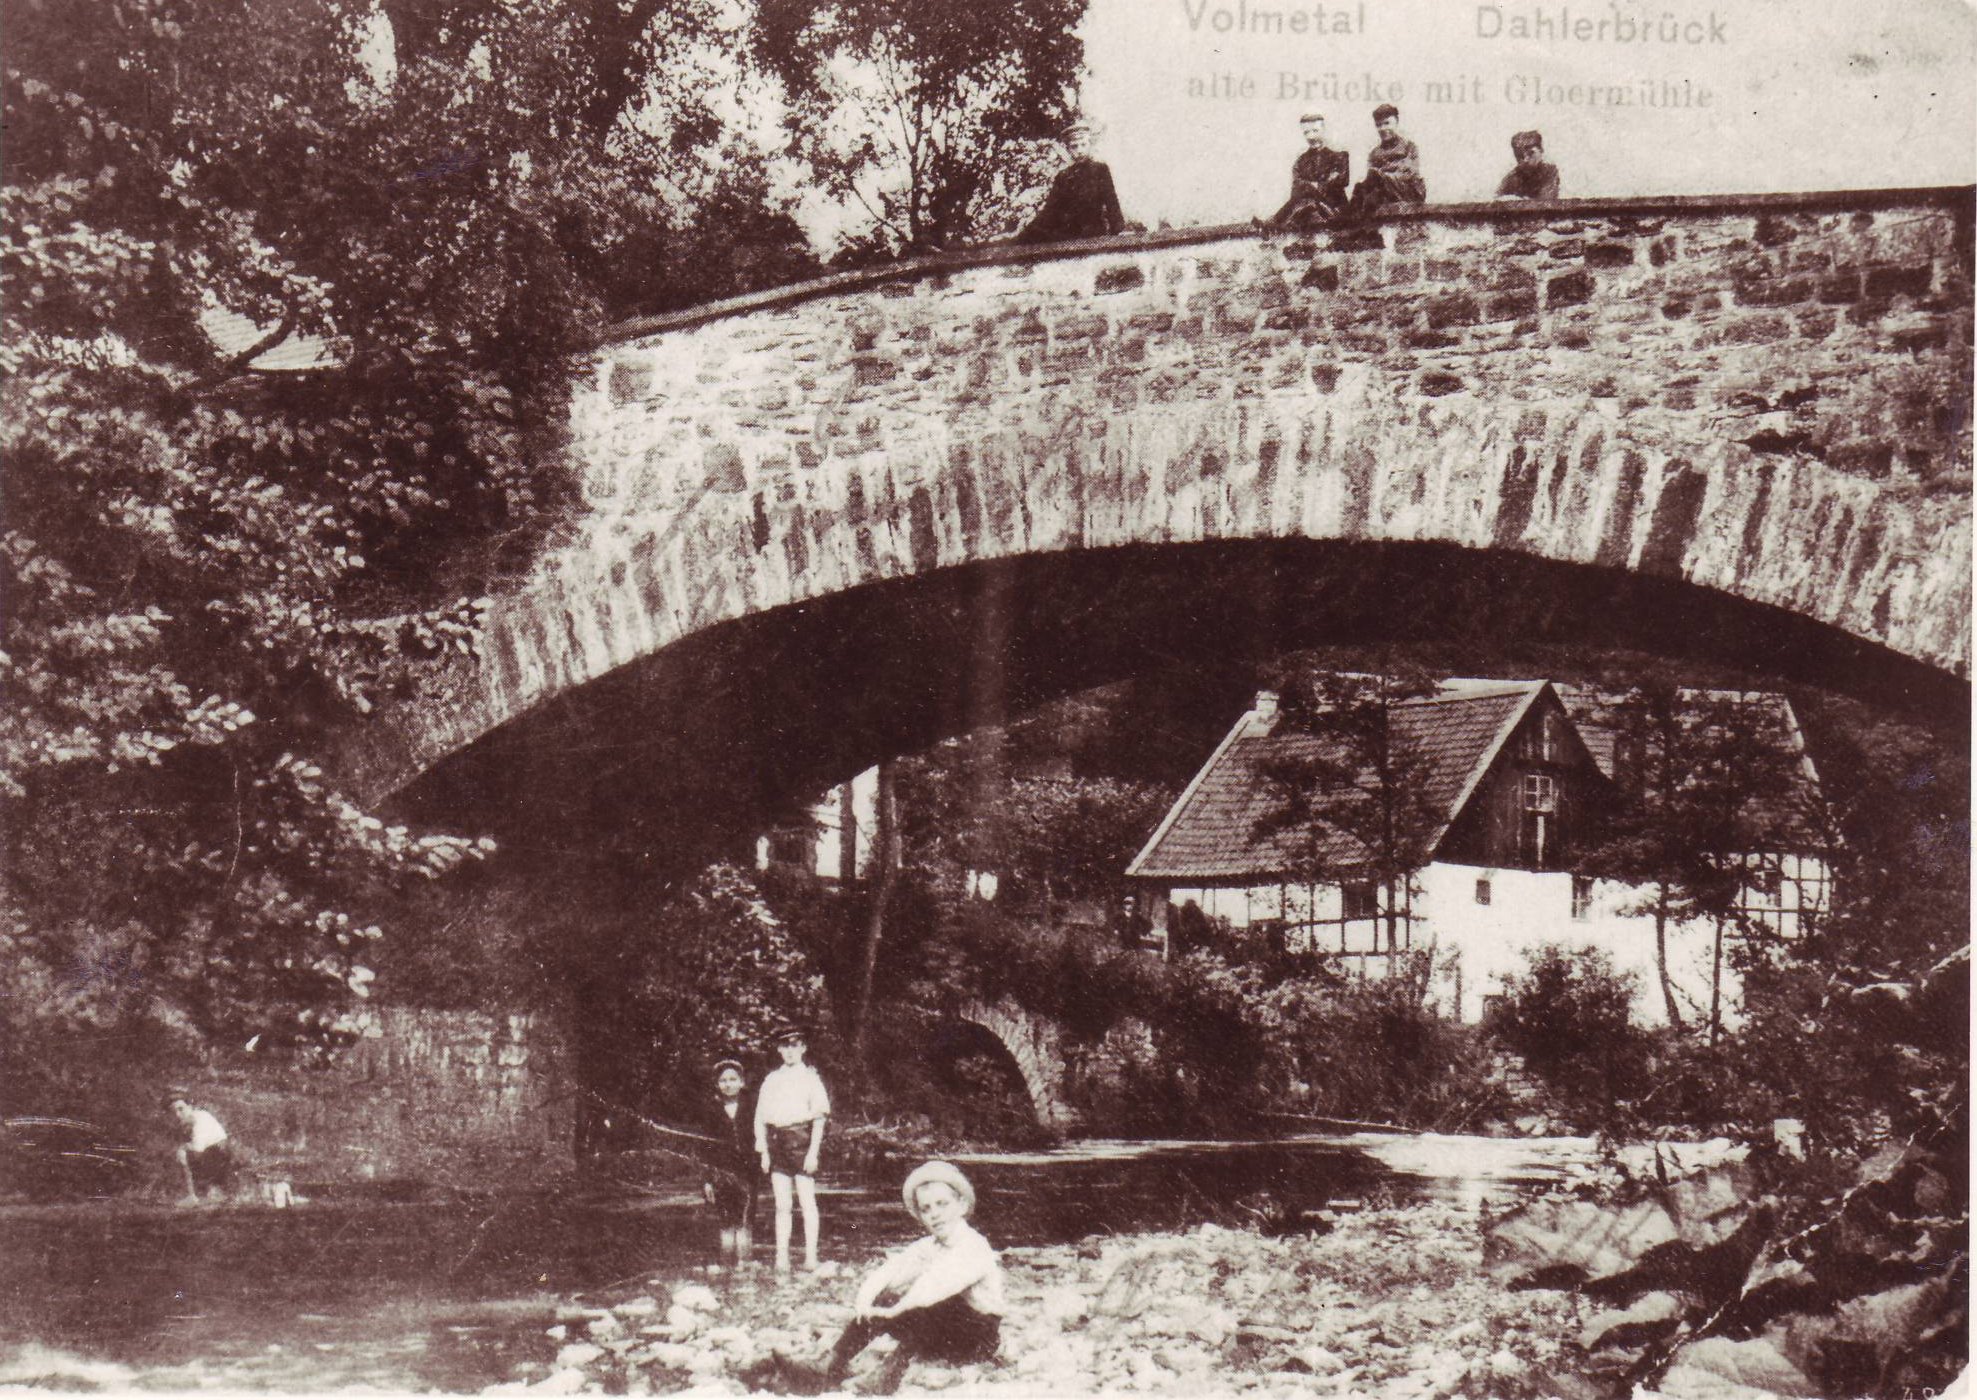 Alte Brücke mit Glörmühle